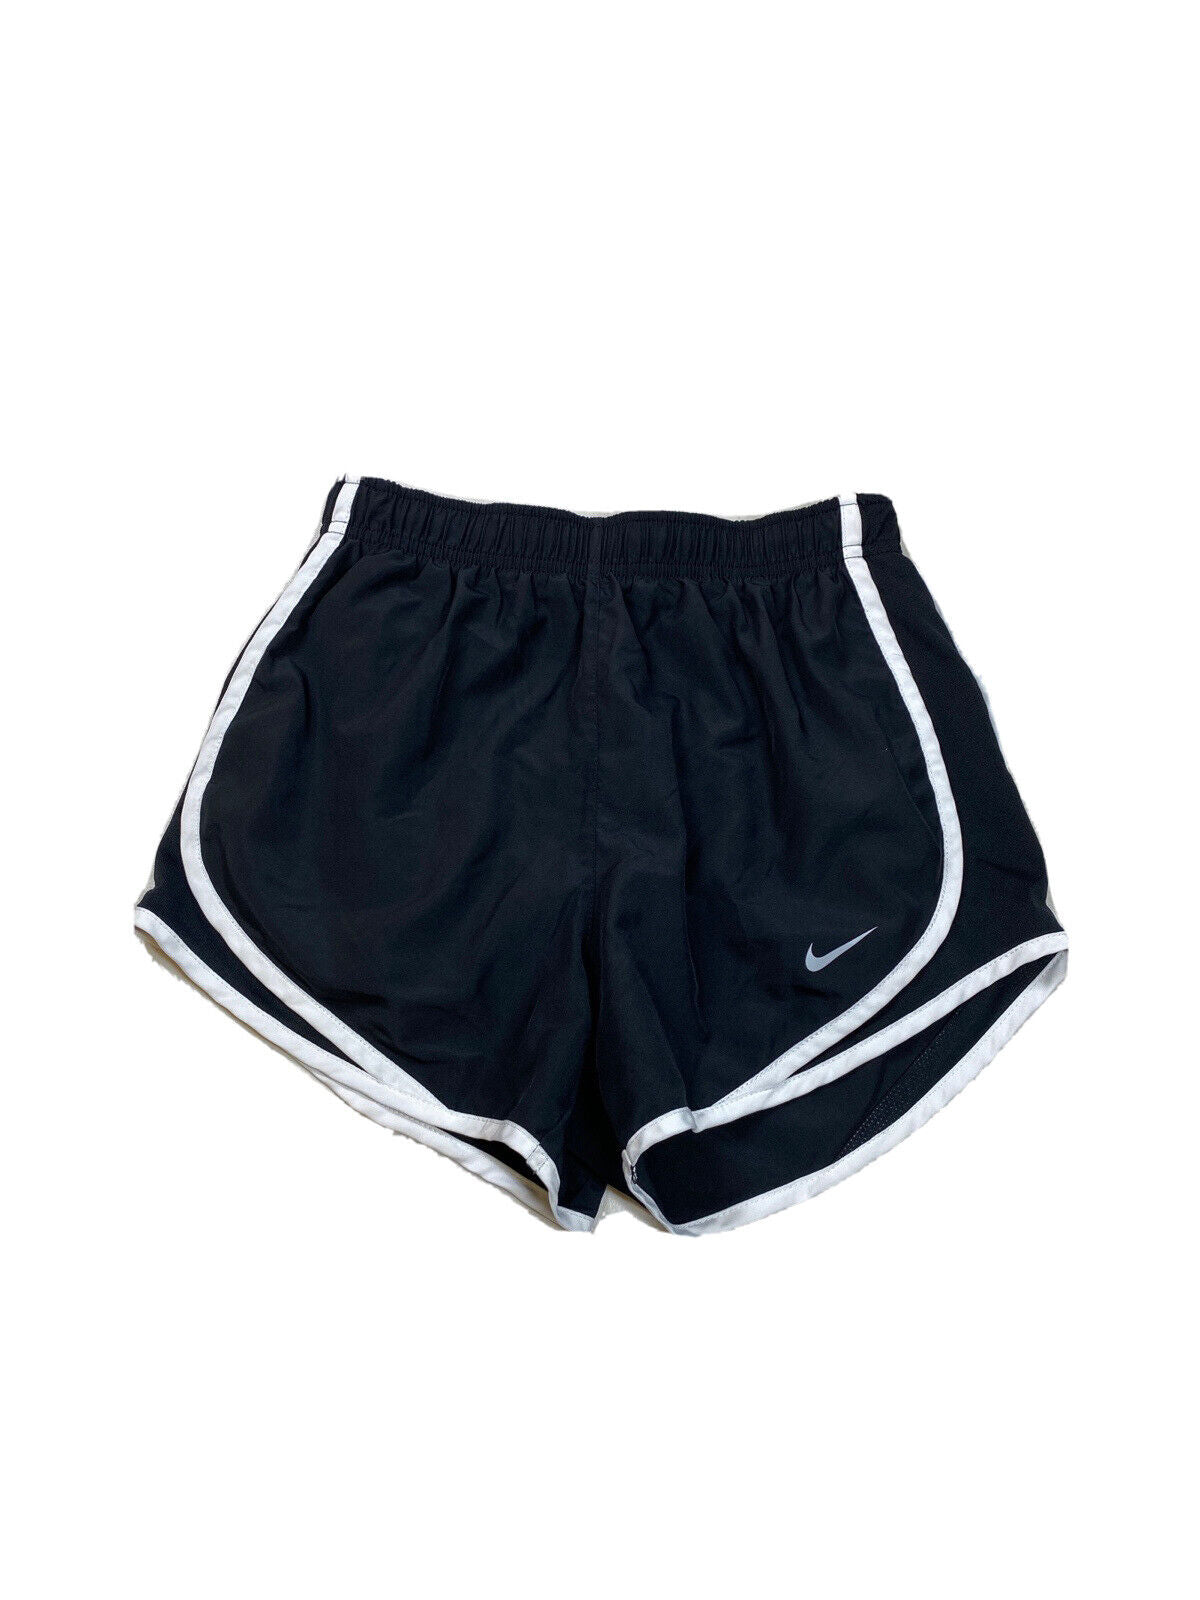 Nike Women's Black Dri-Fit Lined Running Athletic Shorts - XS